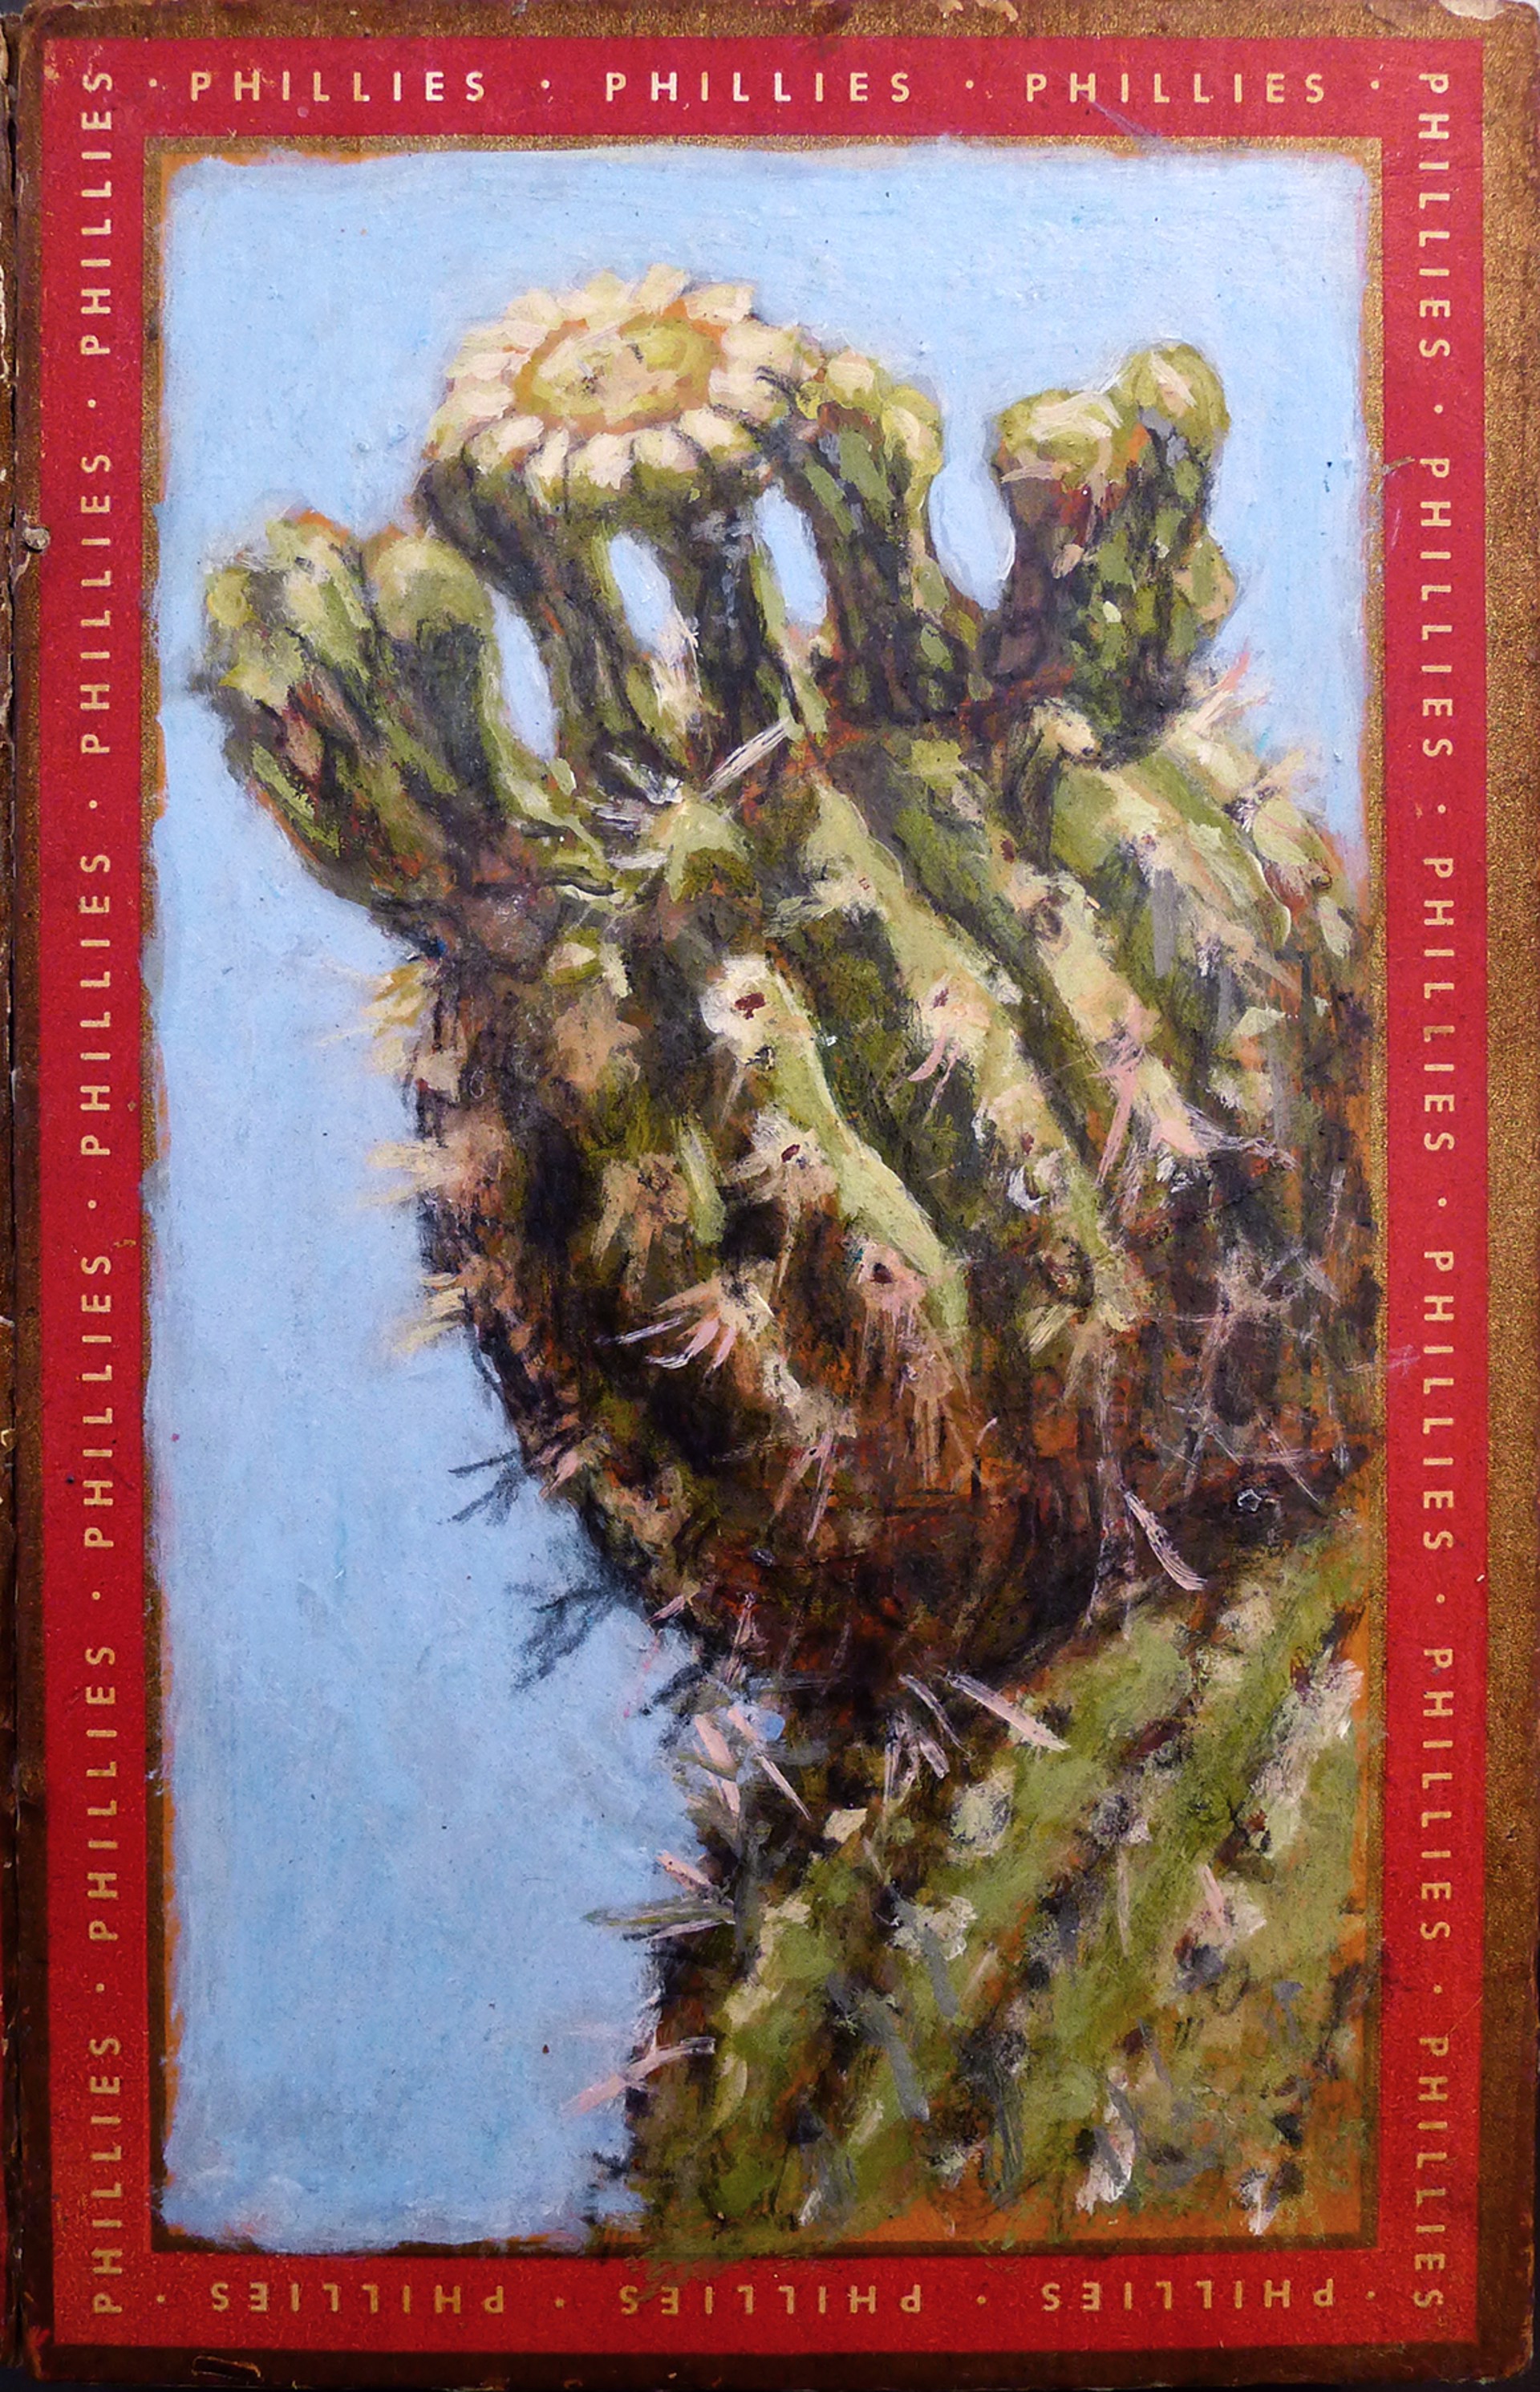 Cactus / Phillies by Ed Musante